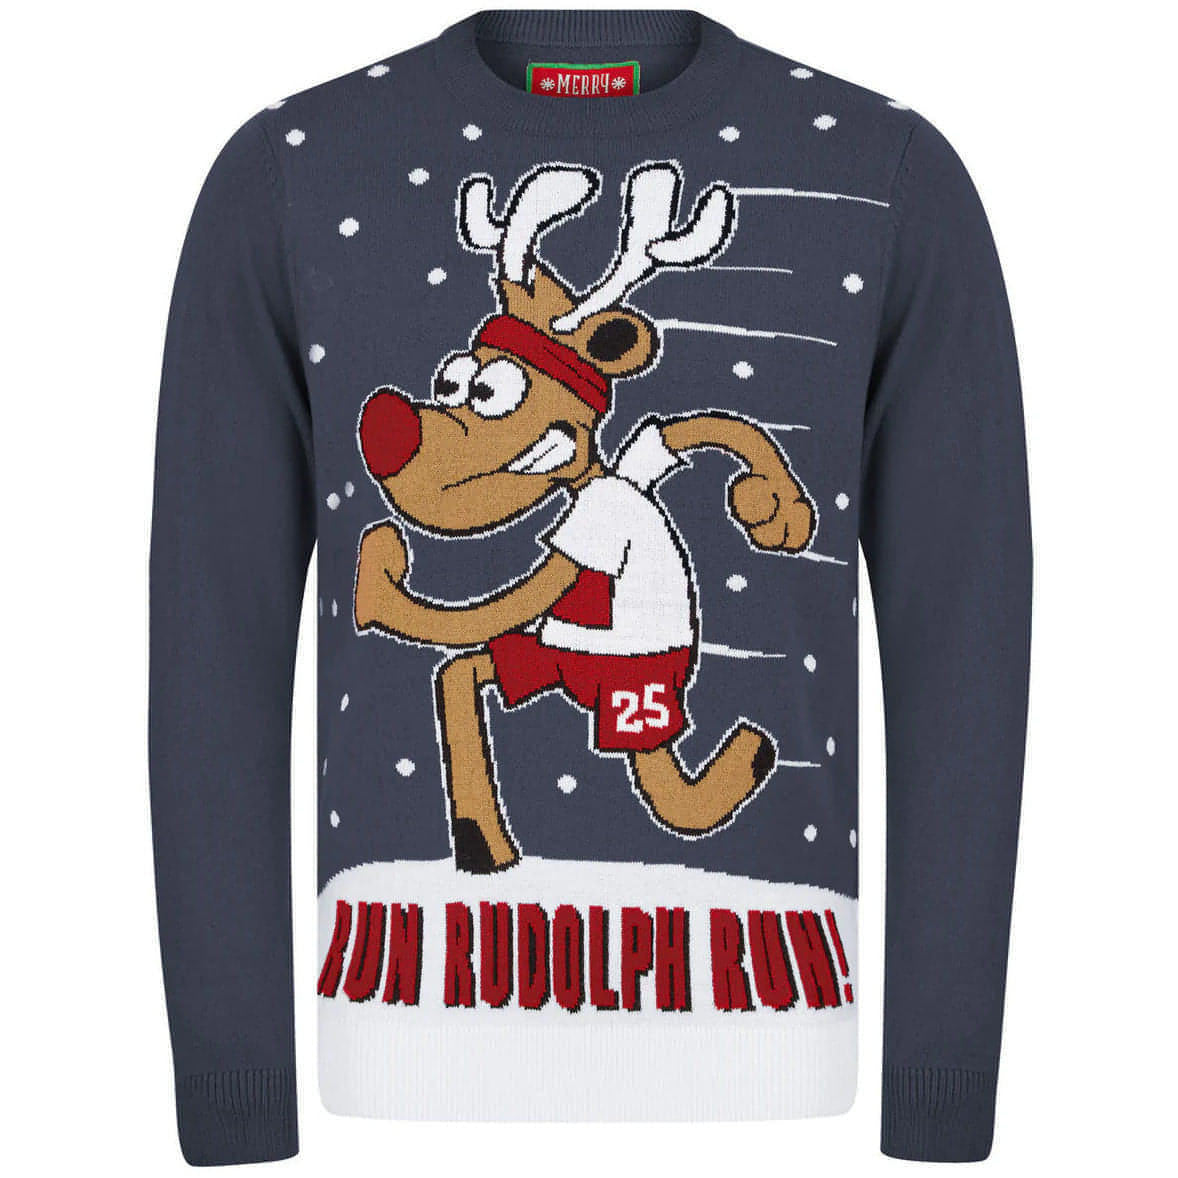 Christmas Run Rudolph Run Jumper